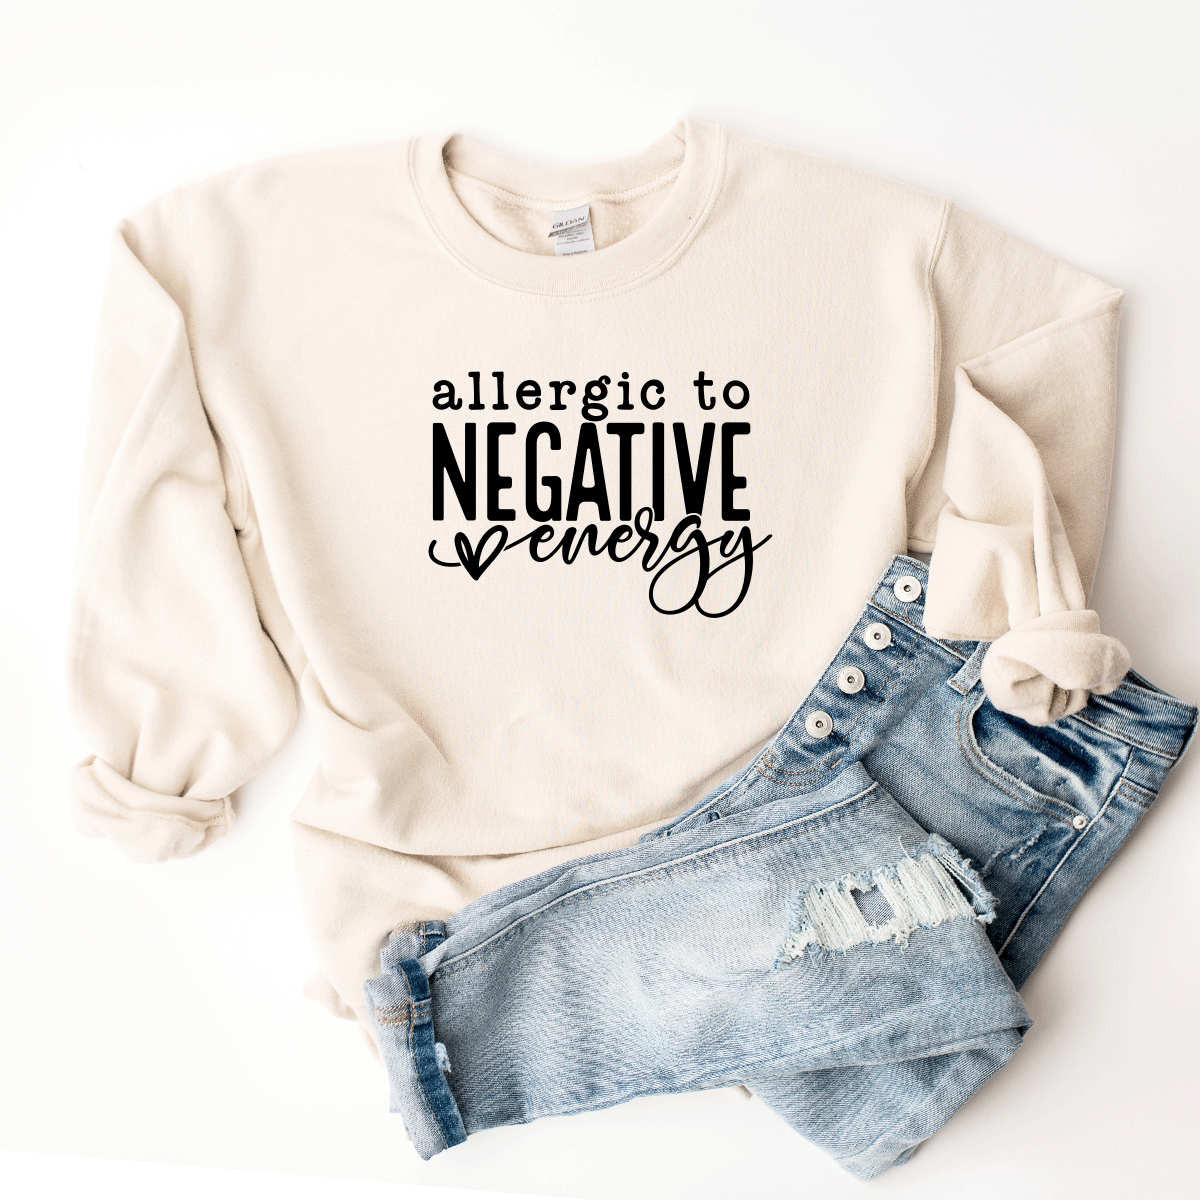 Allergic To Negative Energy - Sweatshirt